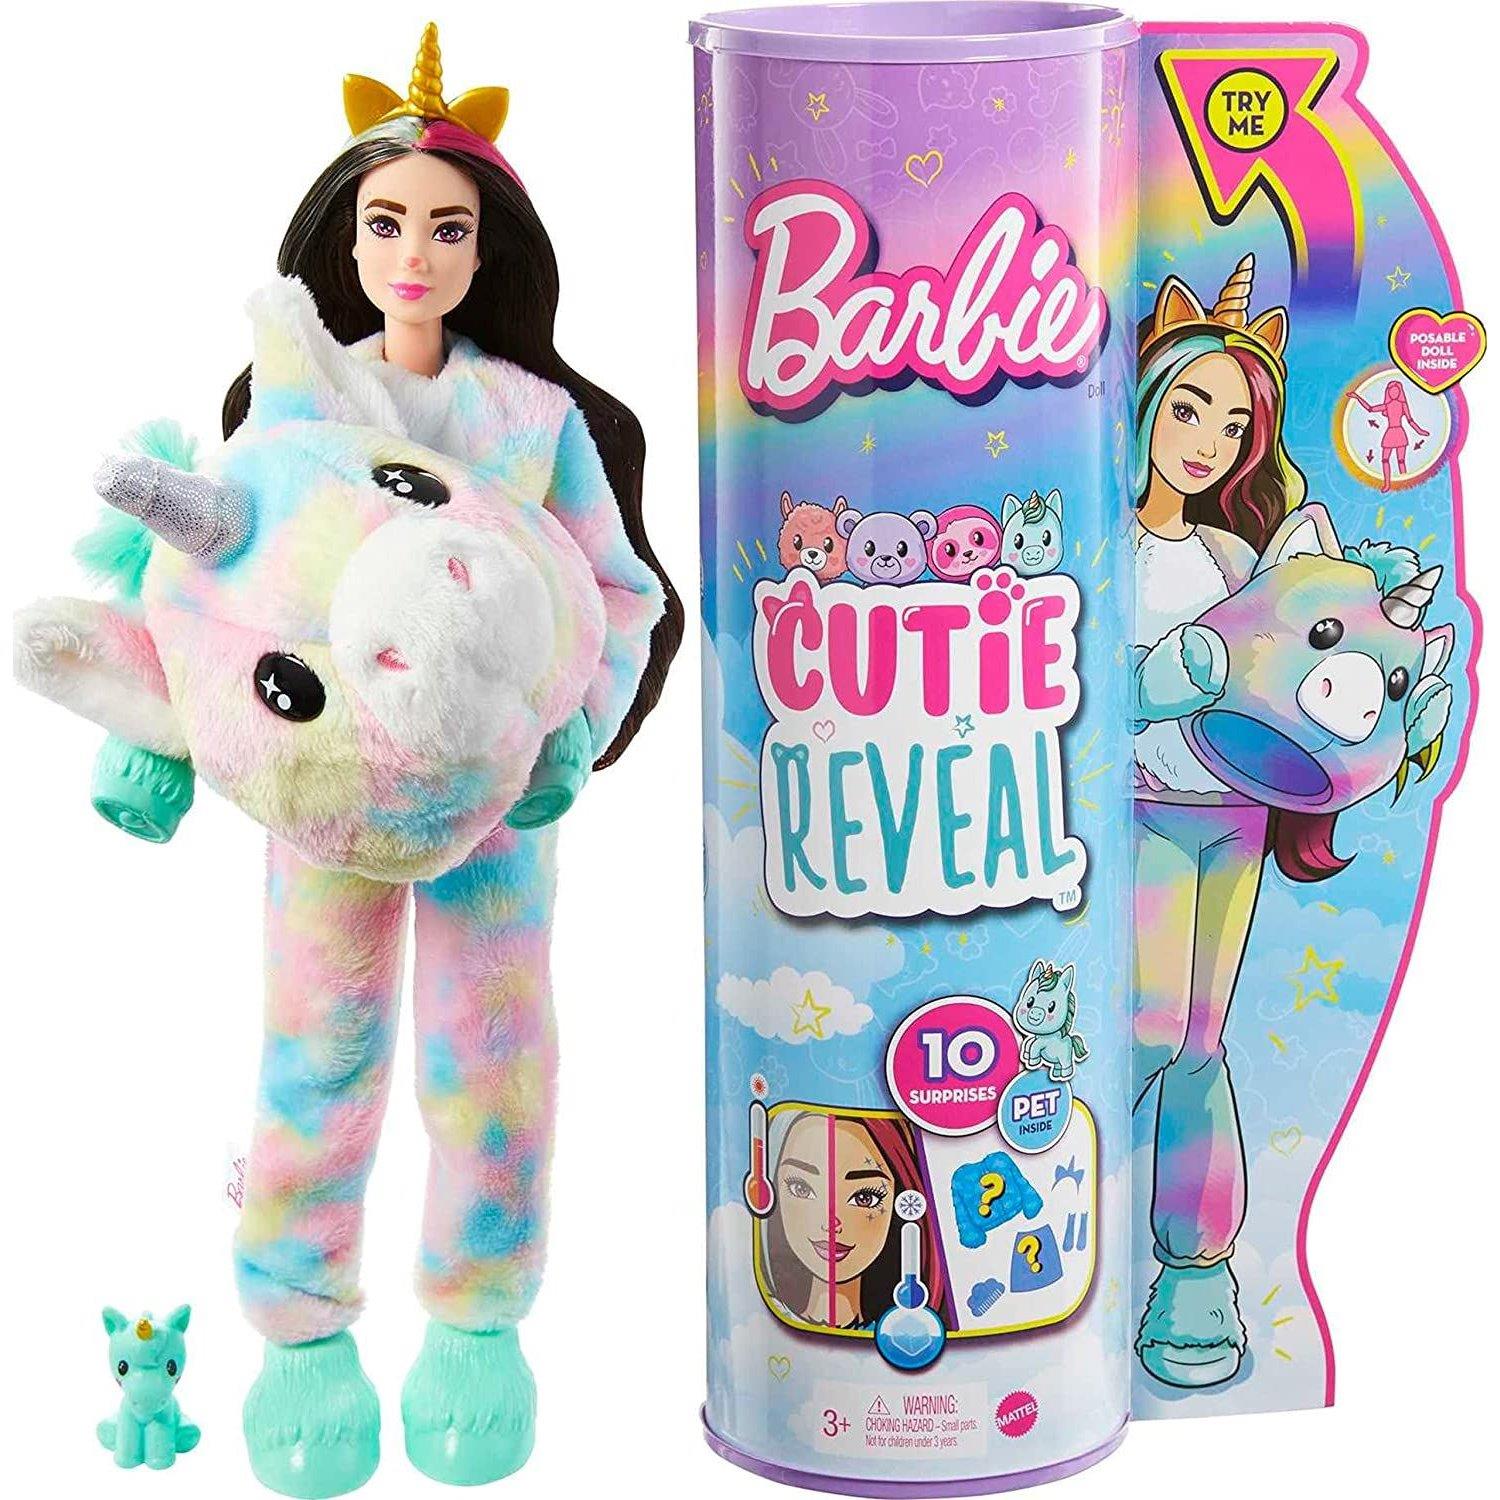 Promo Barbie barbie cutie reveal chez Hyper U